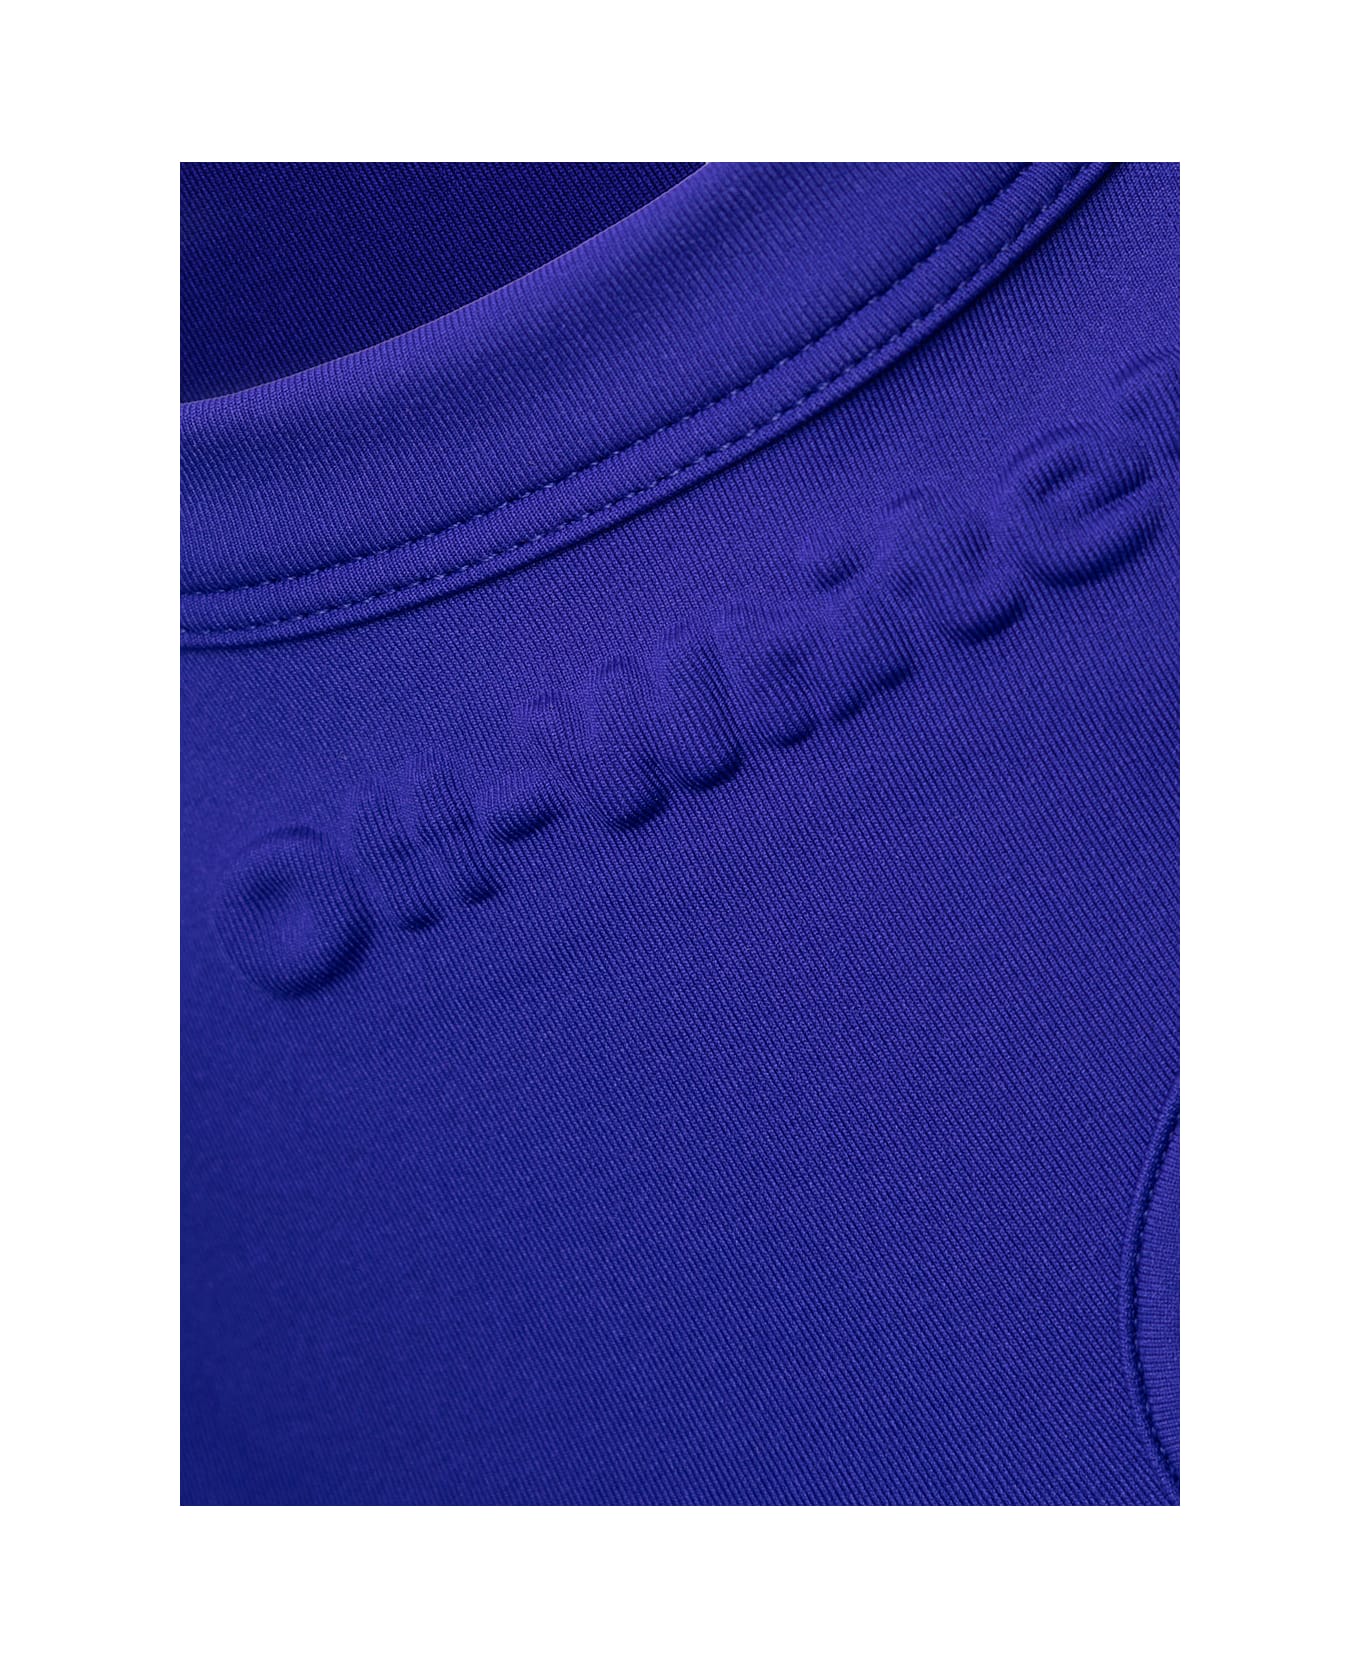 Off-White Sleek Asymmetric Logo Top - Violet